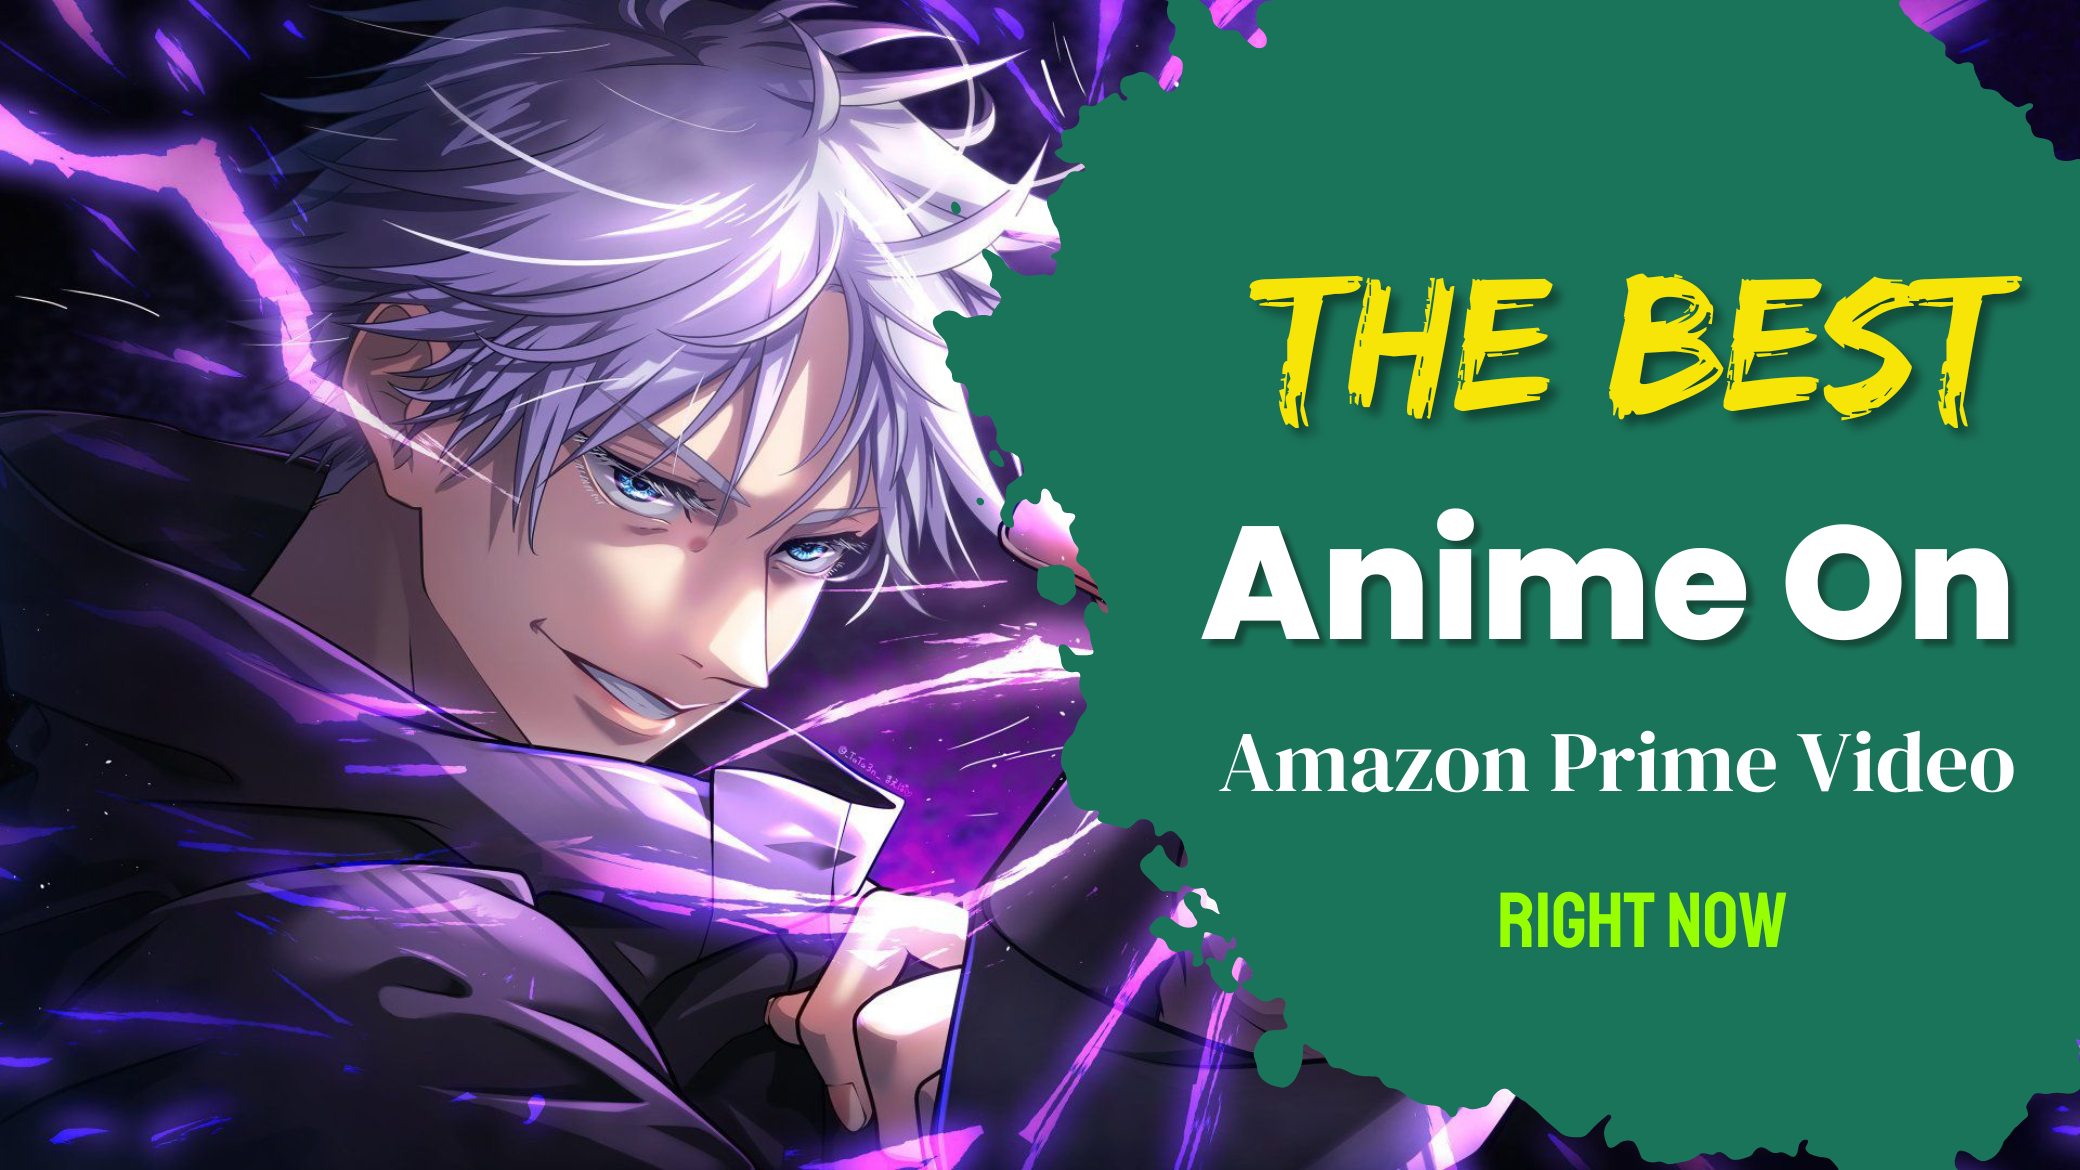 The Best Anime on Amazon Prime Video